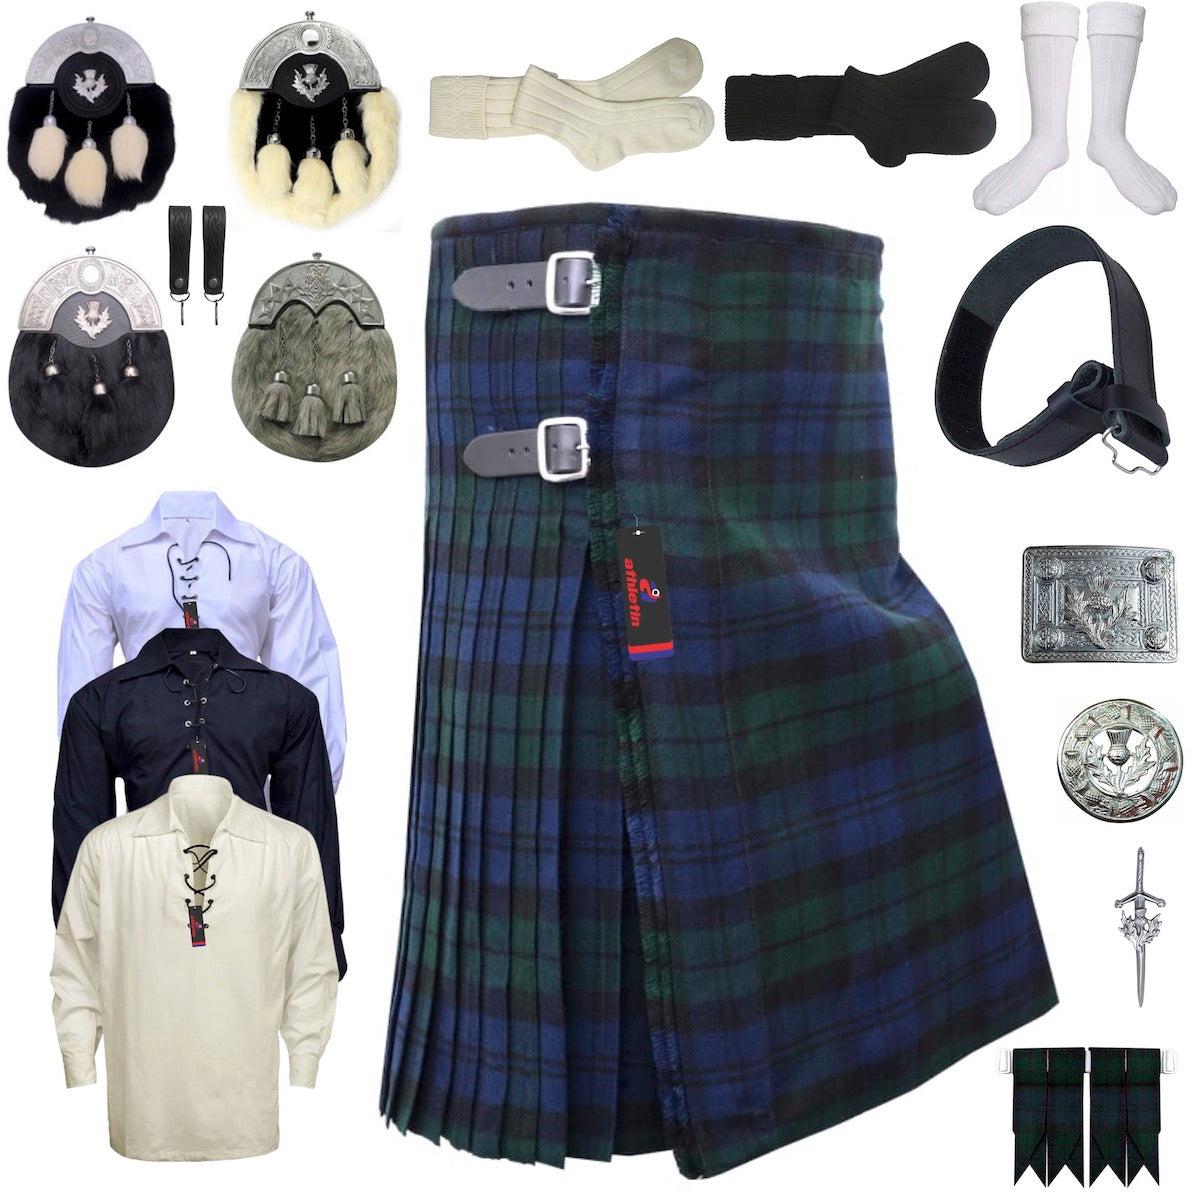 patrón Embotellamiento Descortés Black Watch Tartan Kilt Outfit - Traje de cardo escocés